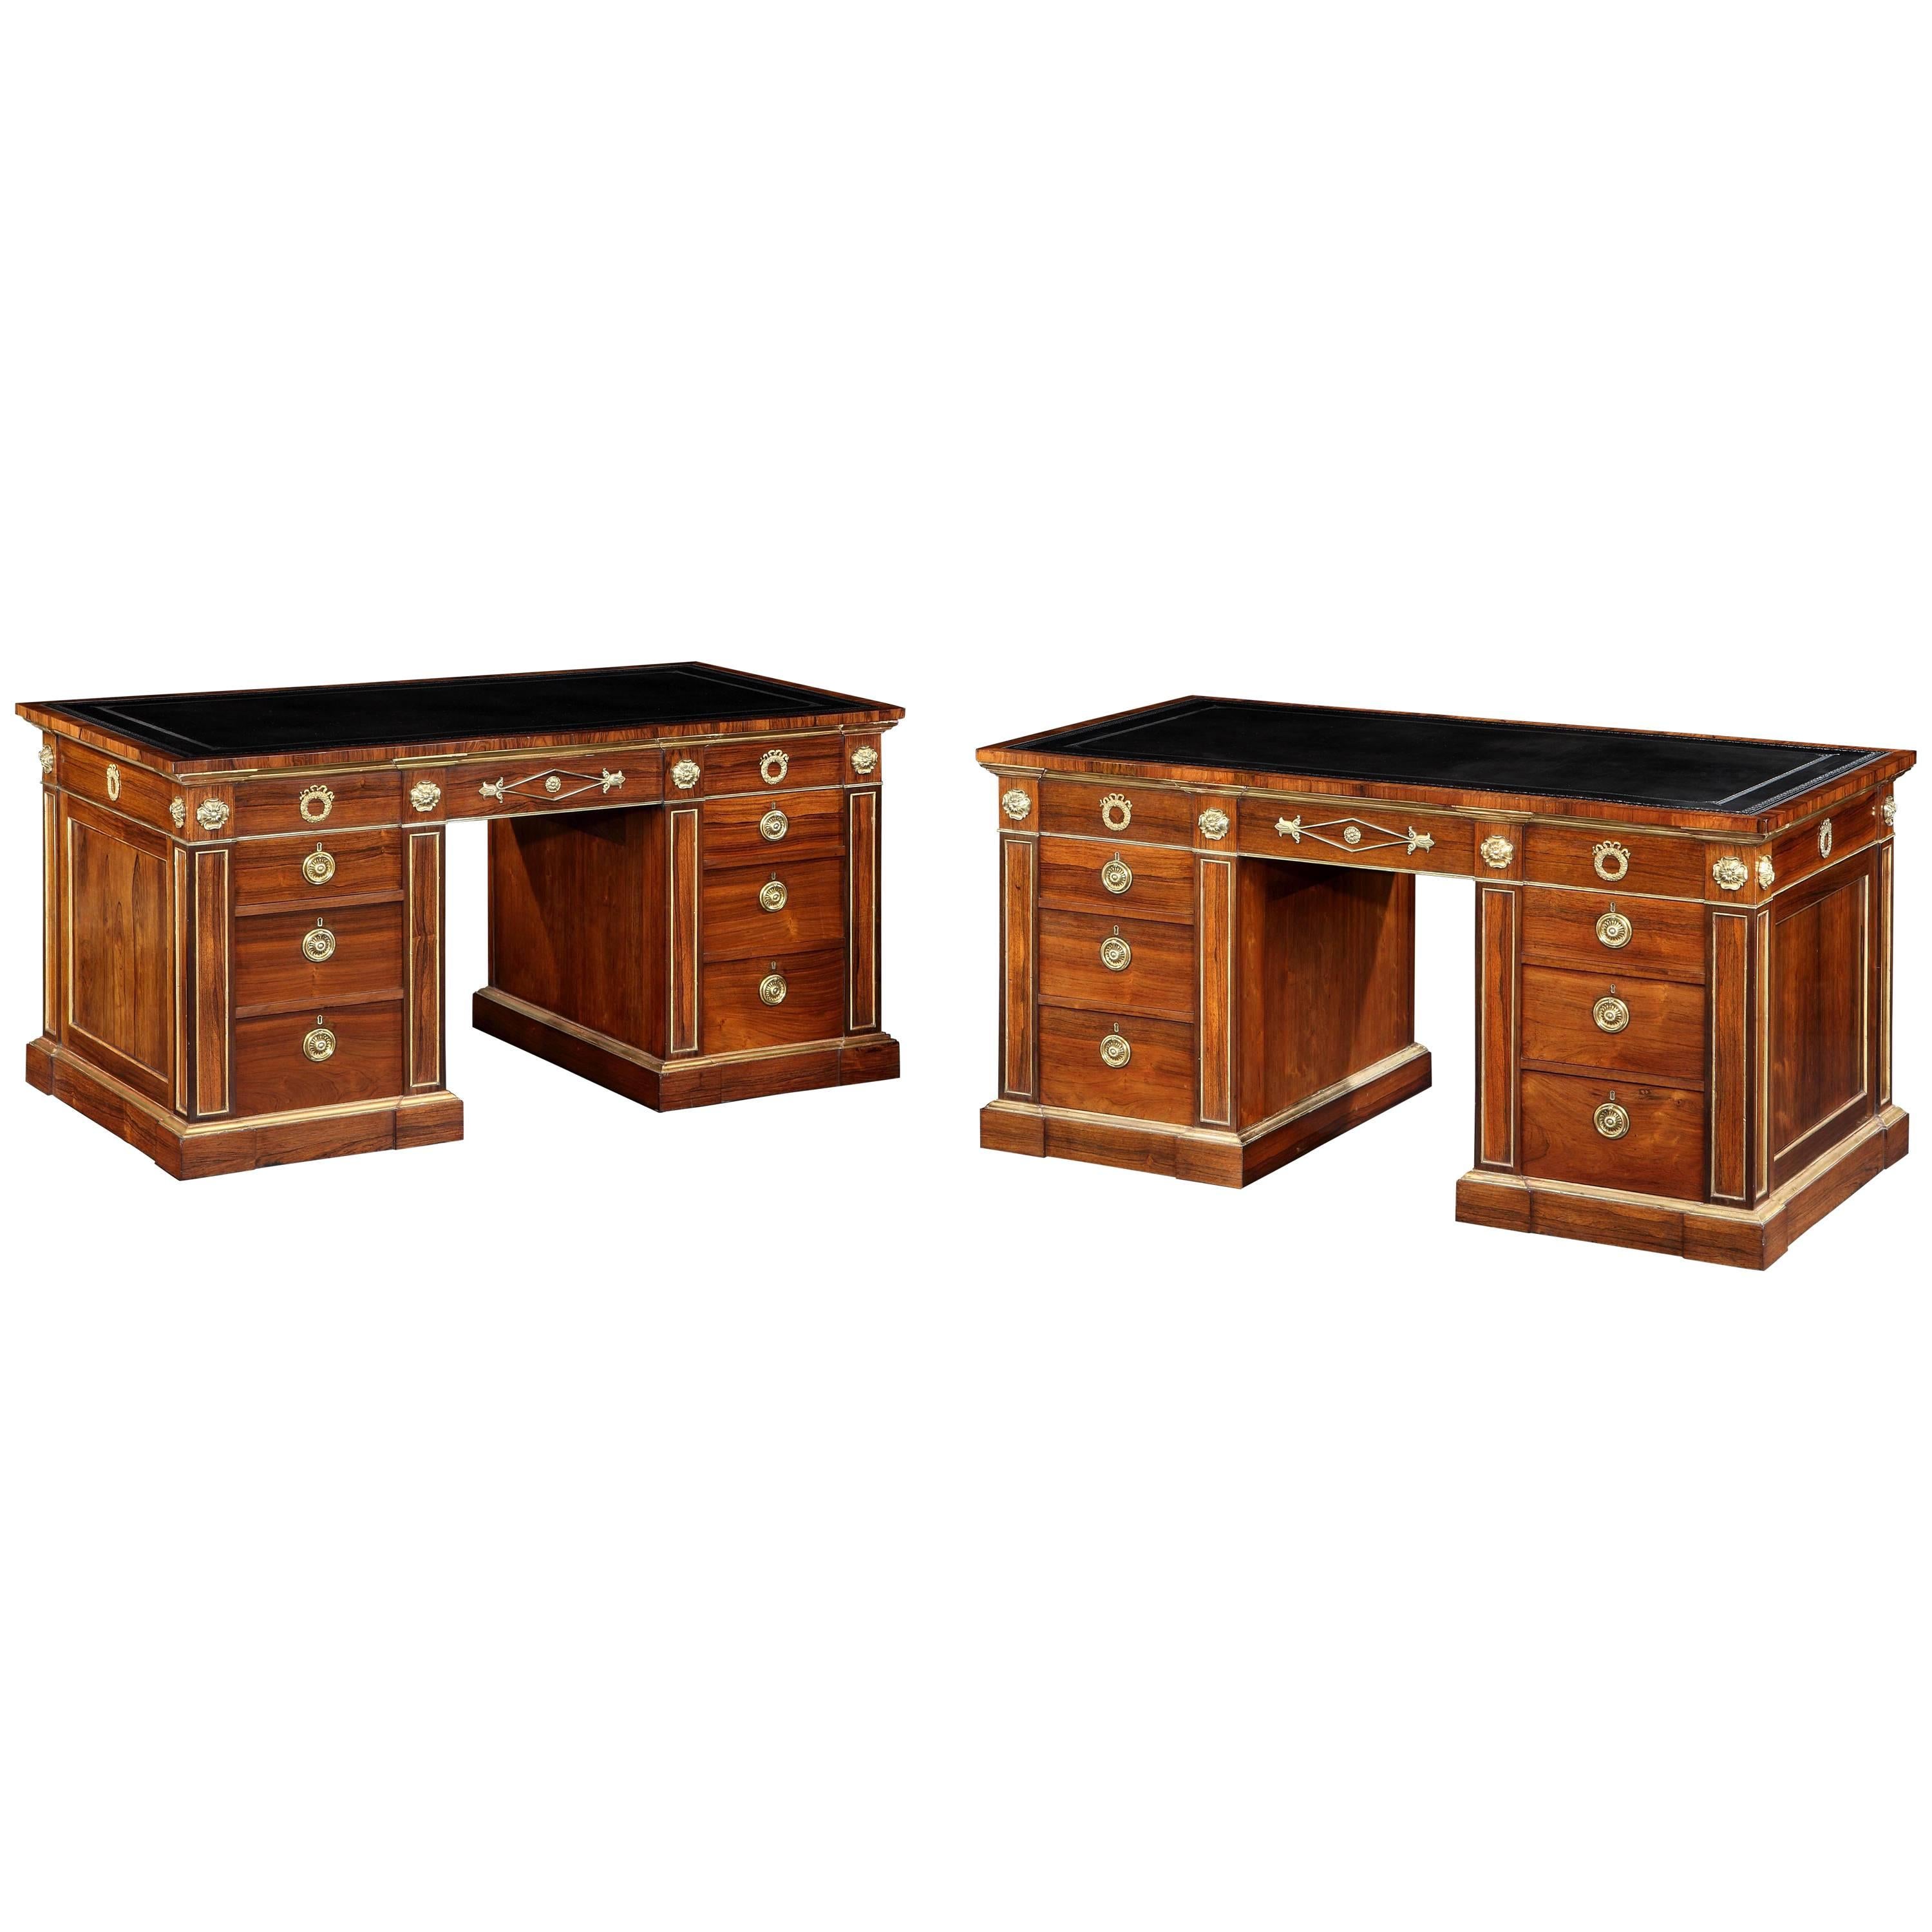 Pair of Gilt and Leather Pedestal Desks in the Regency Manner For Sale